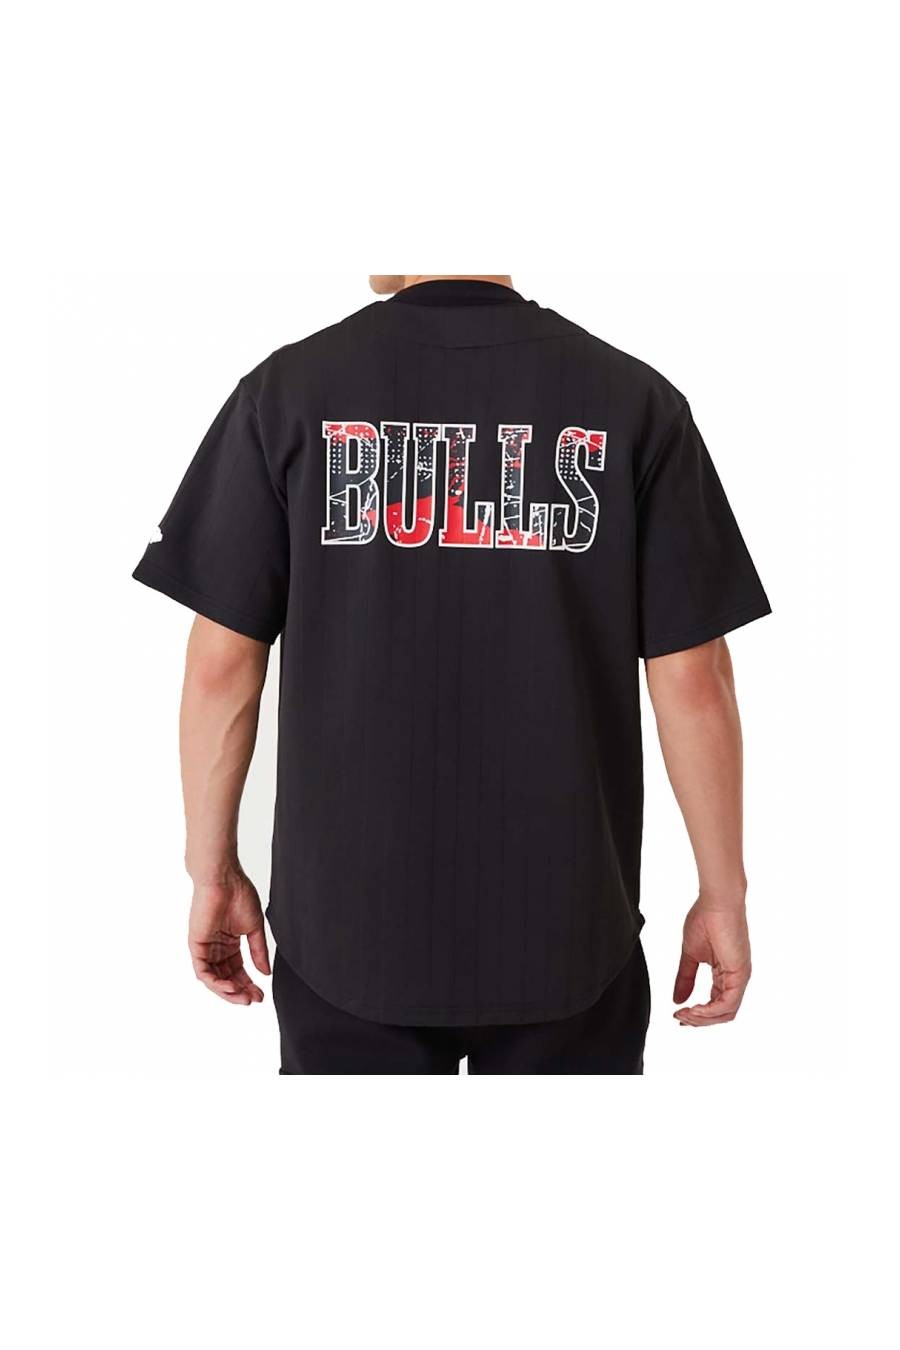 New Era Men's Chicago Bulls NBA Championship Oversized T-Shirt 60332206